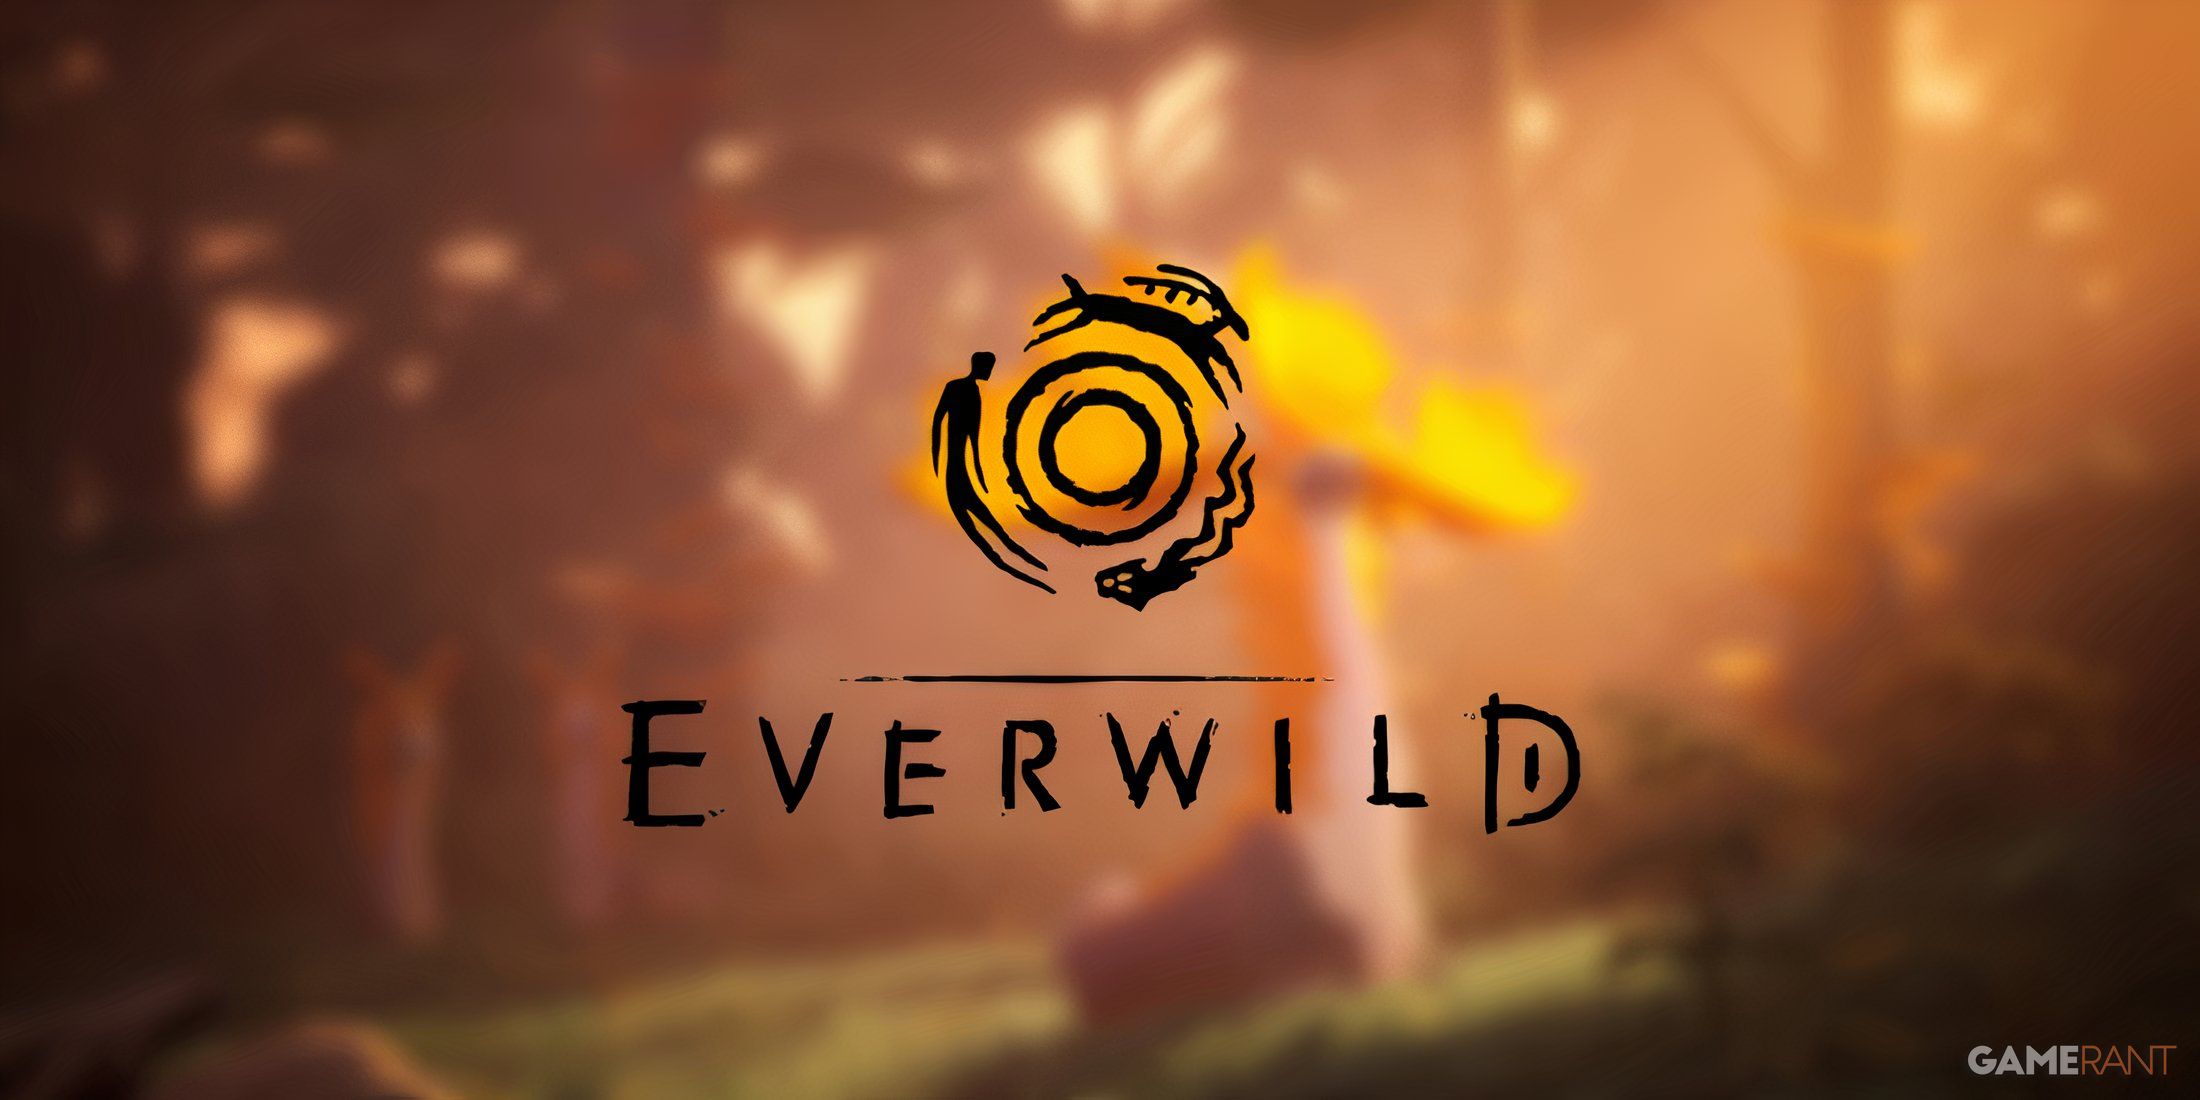 blurred everwild deer with everwild logo